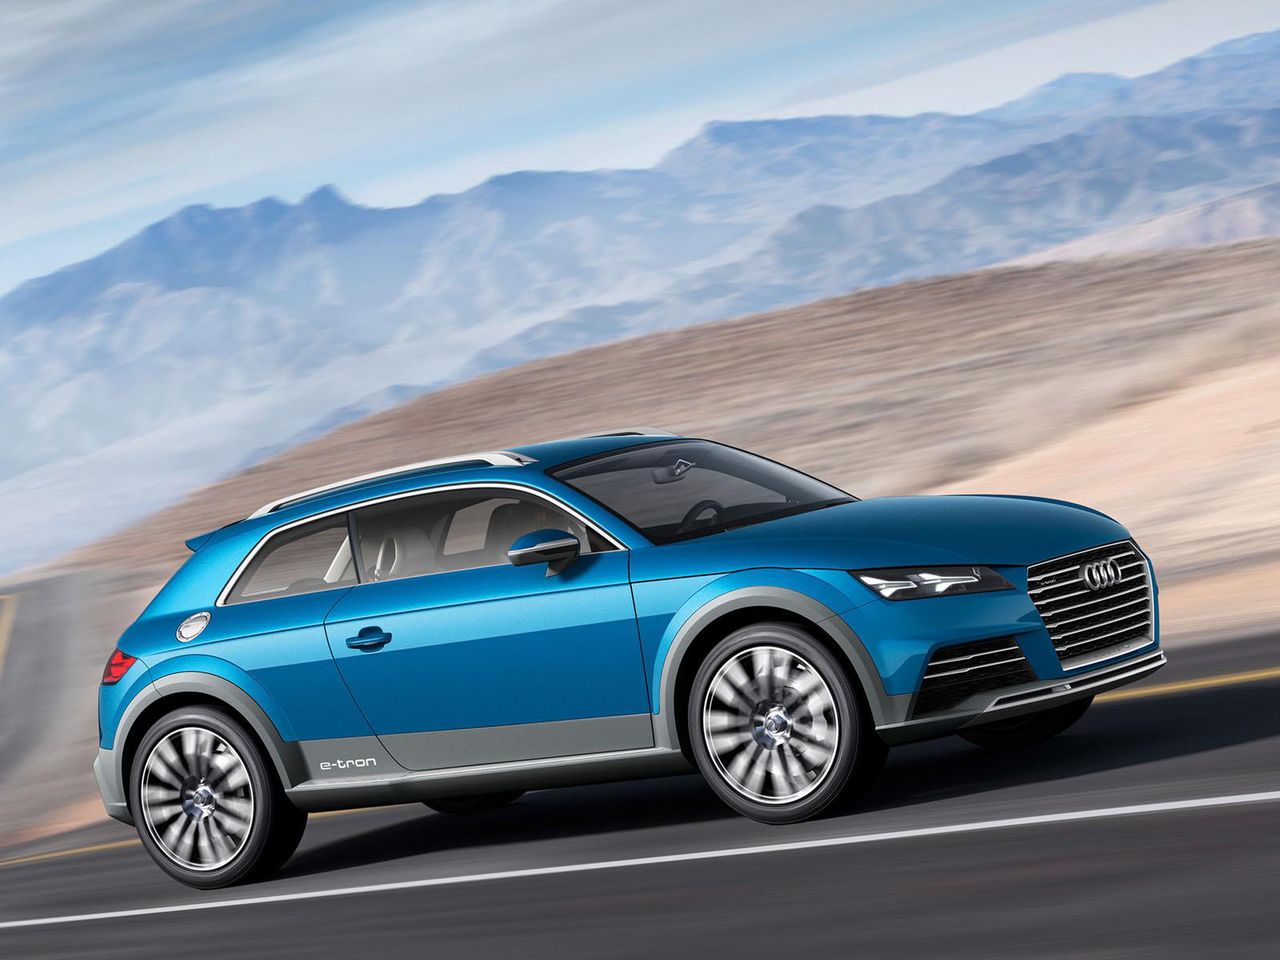 Audi Crossover Coupé Concept - mały i uniwersalny? [aktualizacja]